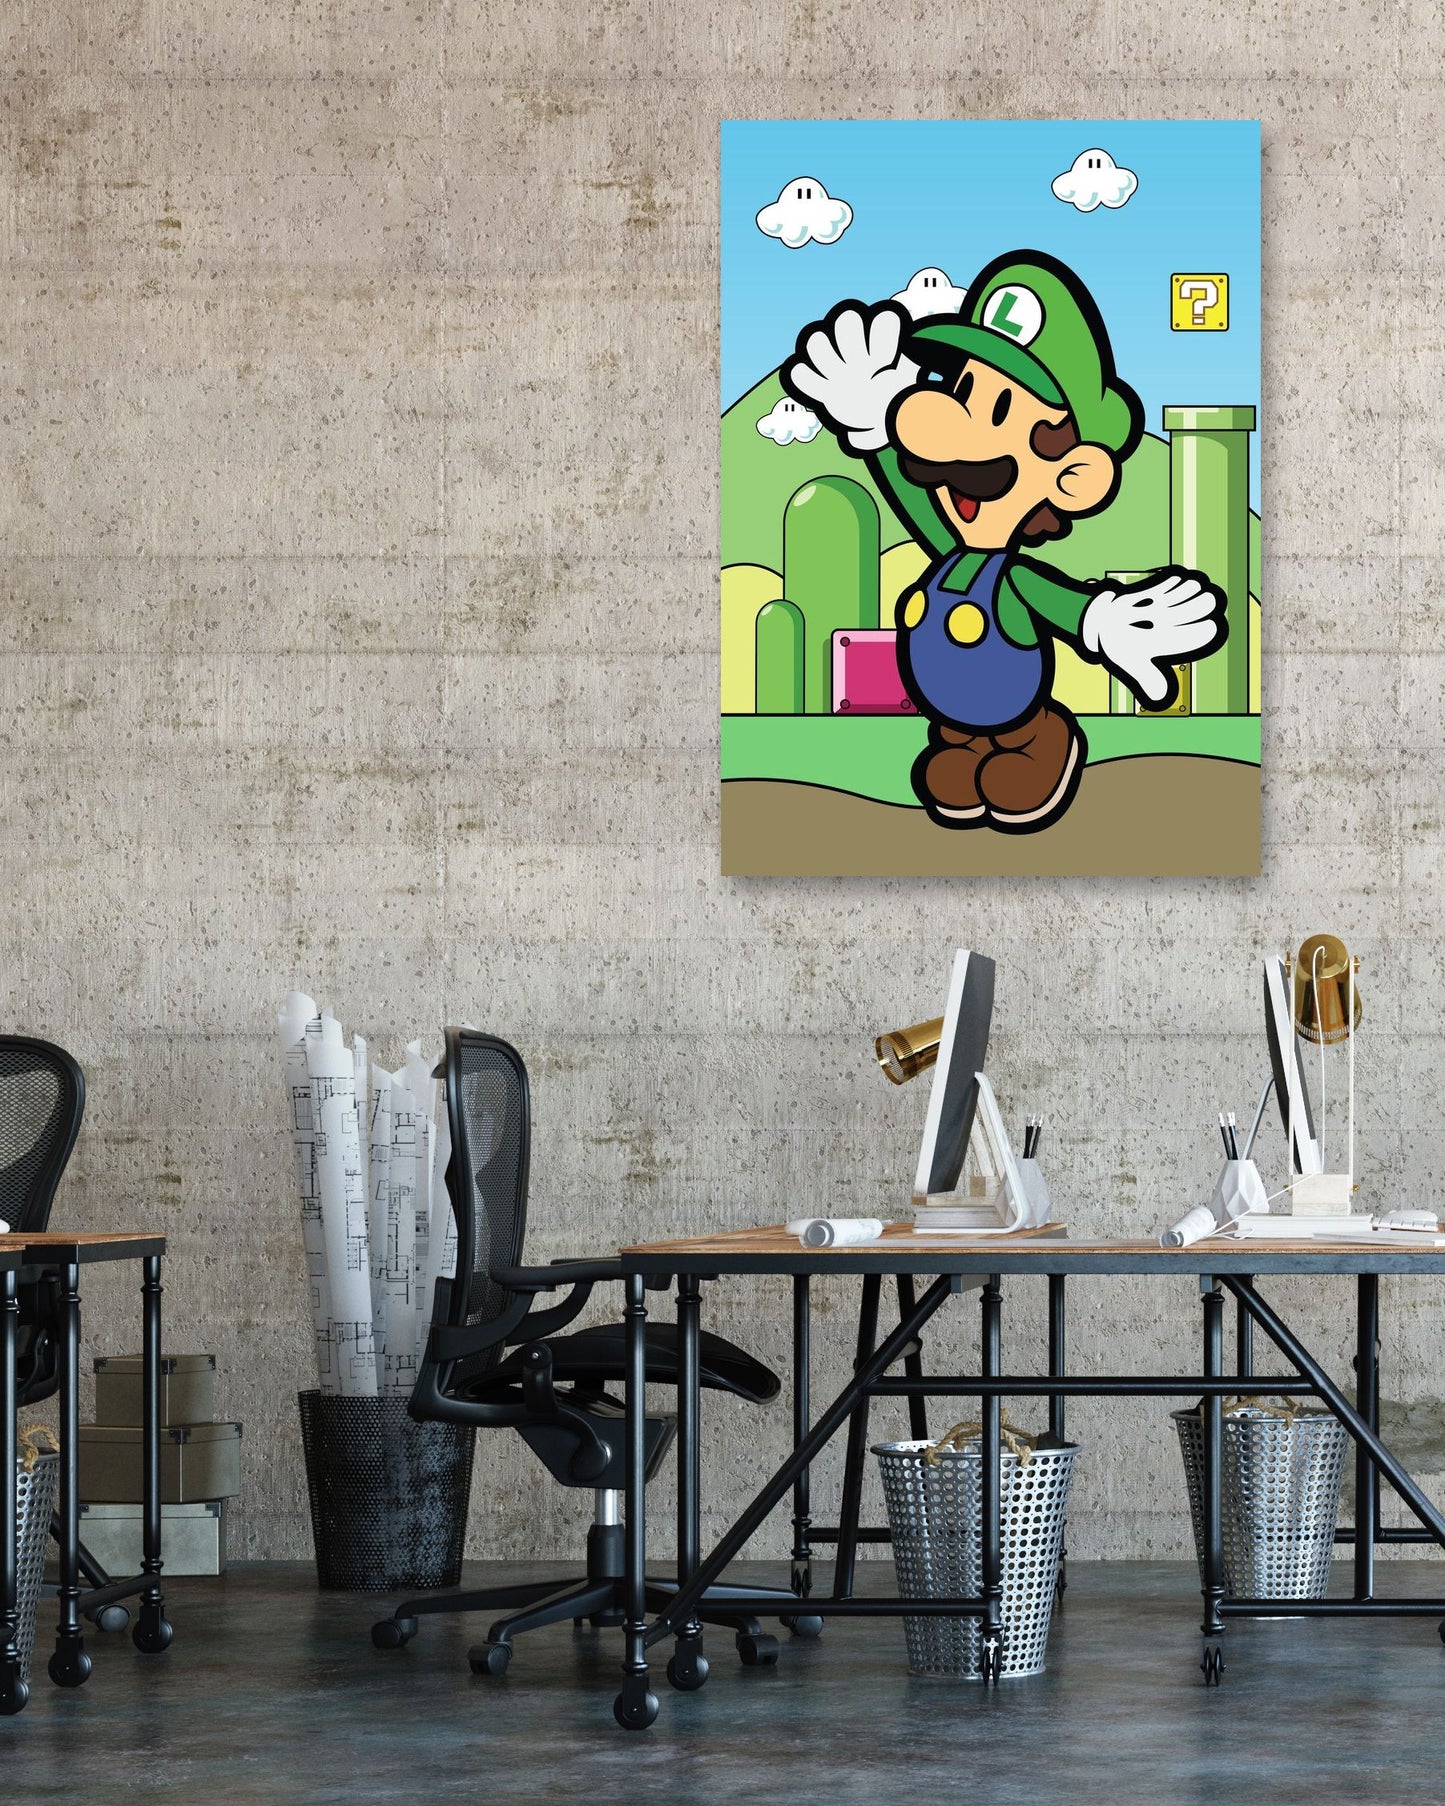 Luigi Bros - Super Mario Game - @GreyArt